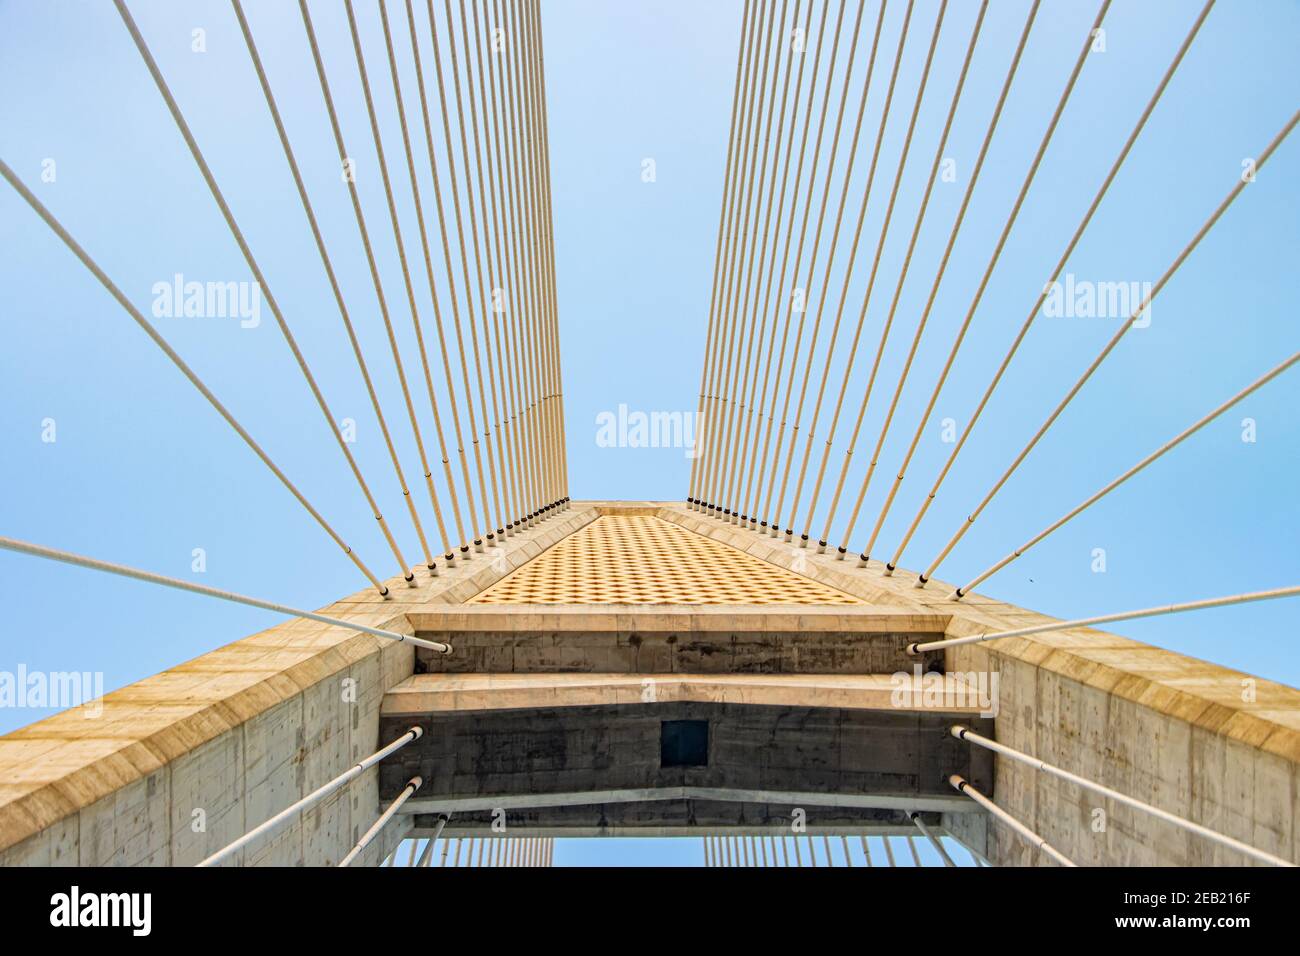 Betonbrücken-Pylon mit parallelen Leitungen aus Stahlseil. Durchgang unter dem Stützturm der Kabelbrücke. Konstruktion Kabelgestabebrücke aga Stockfoto